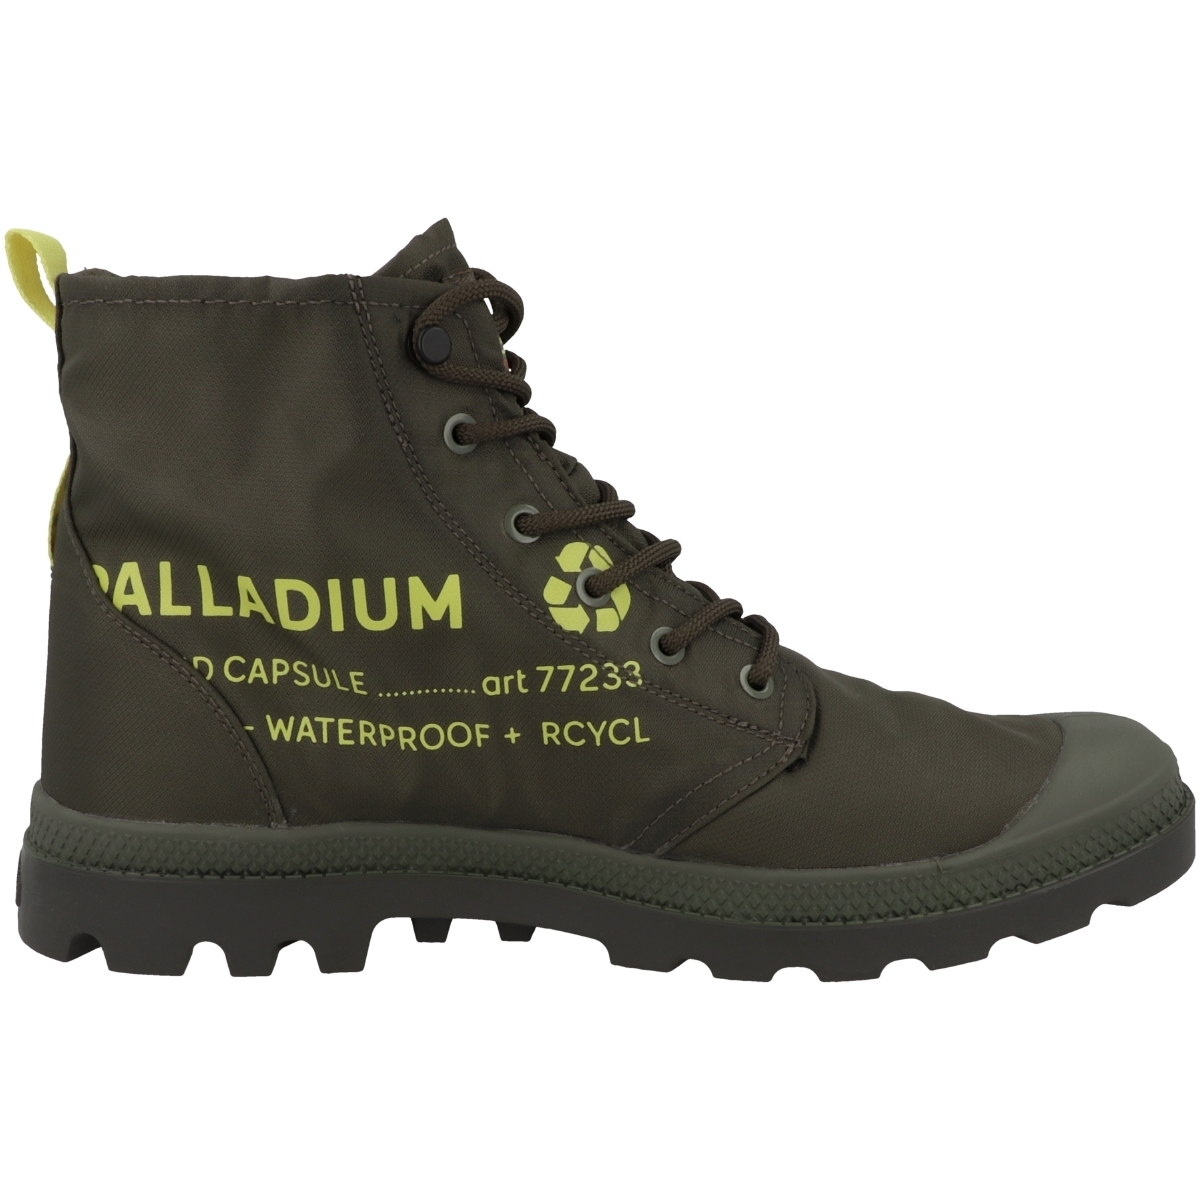 Palladium Pampa Rcycl WP+ 2 Boots